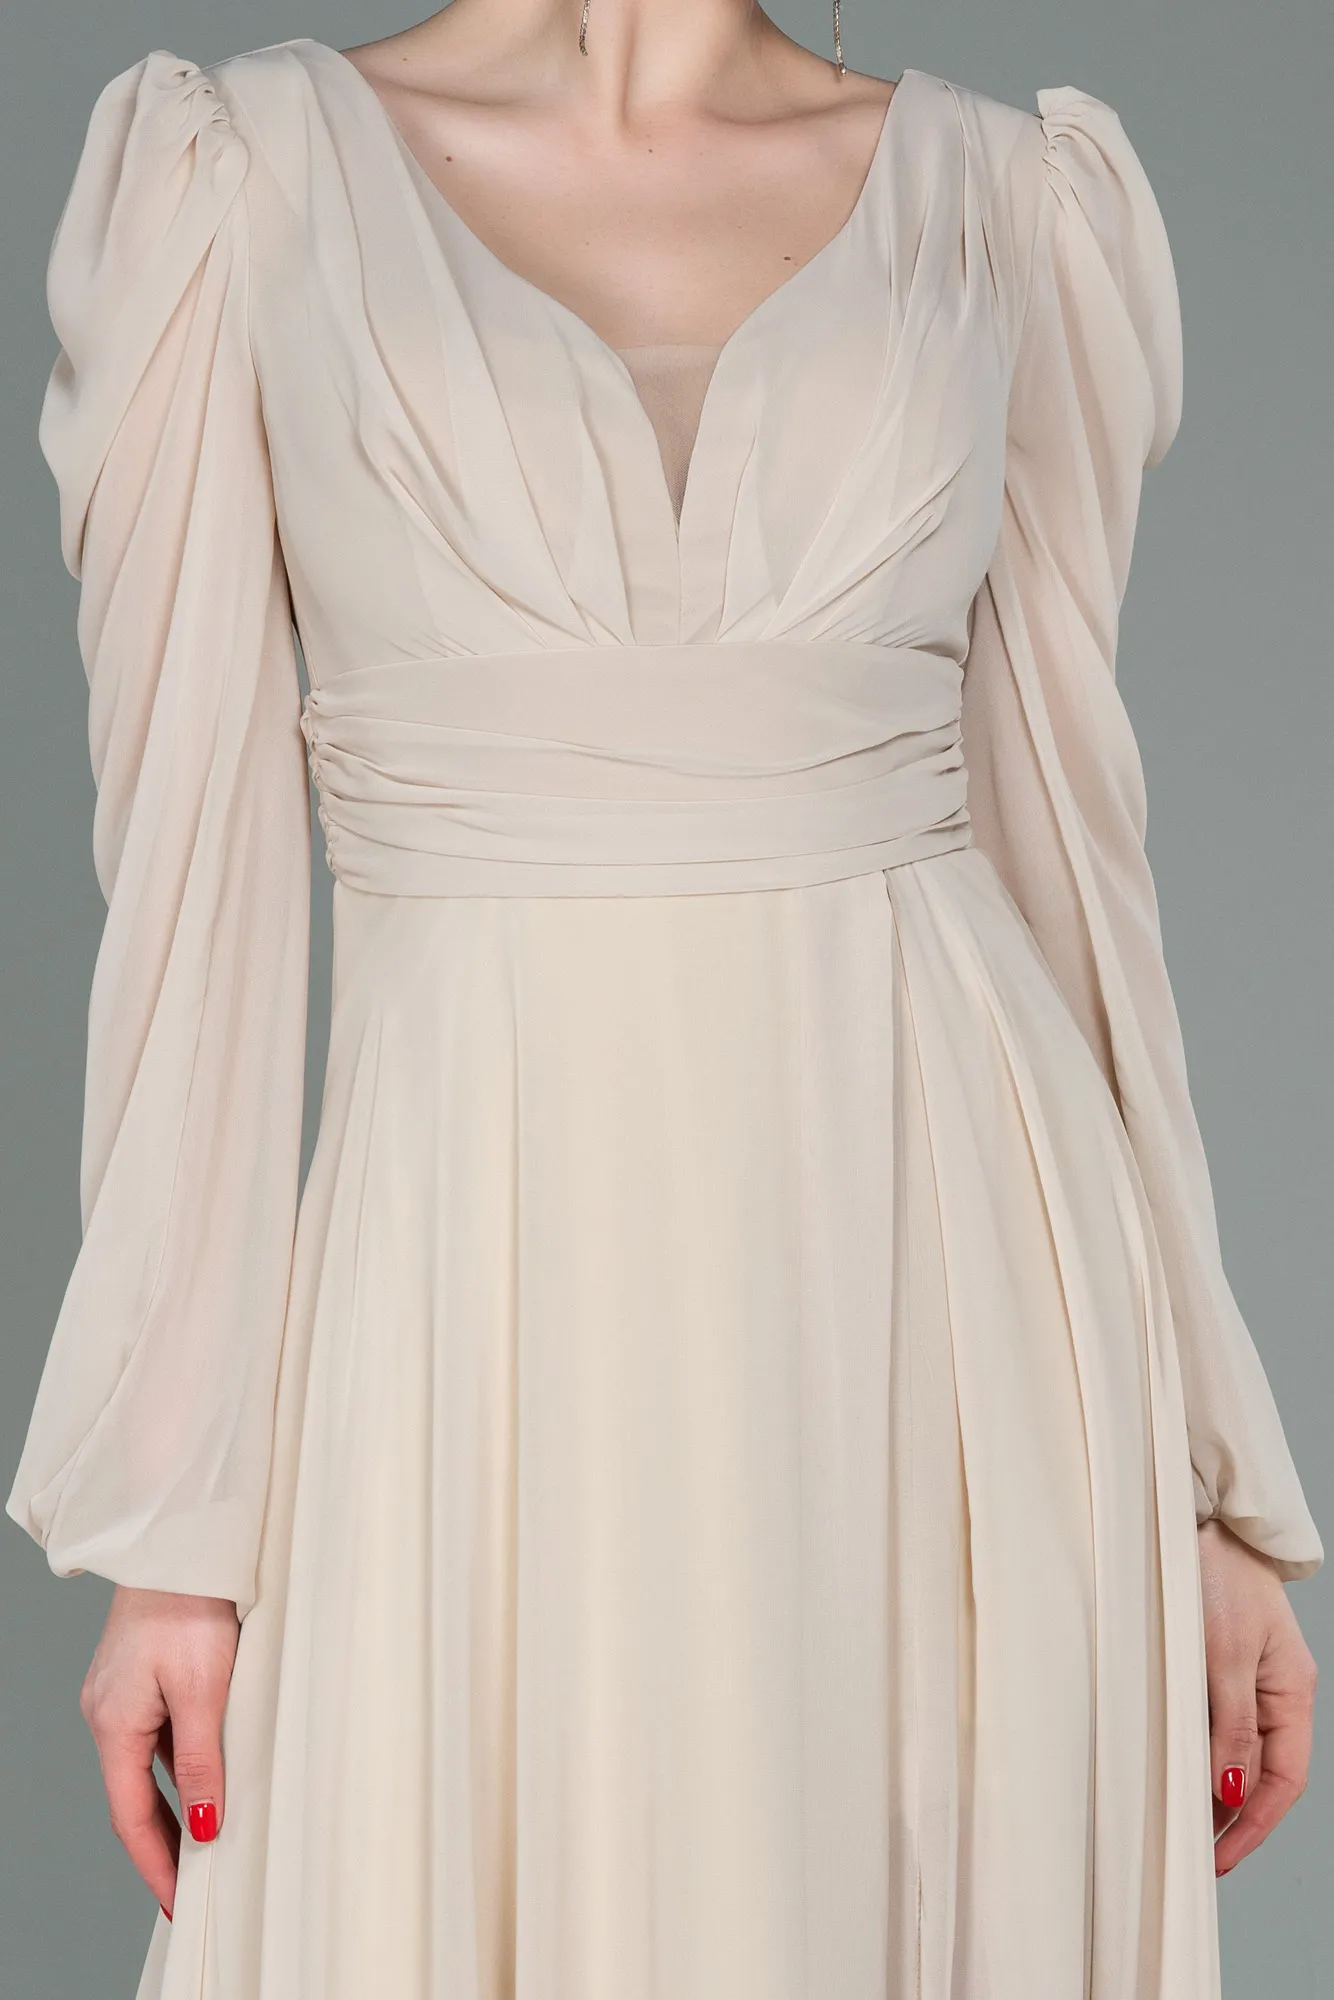 Beige-Long Chiffon Evening Dress ABU3085